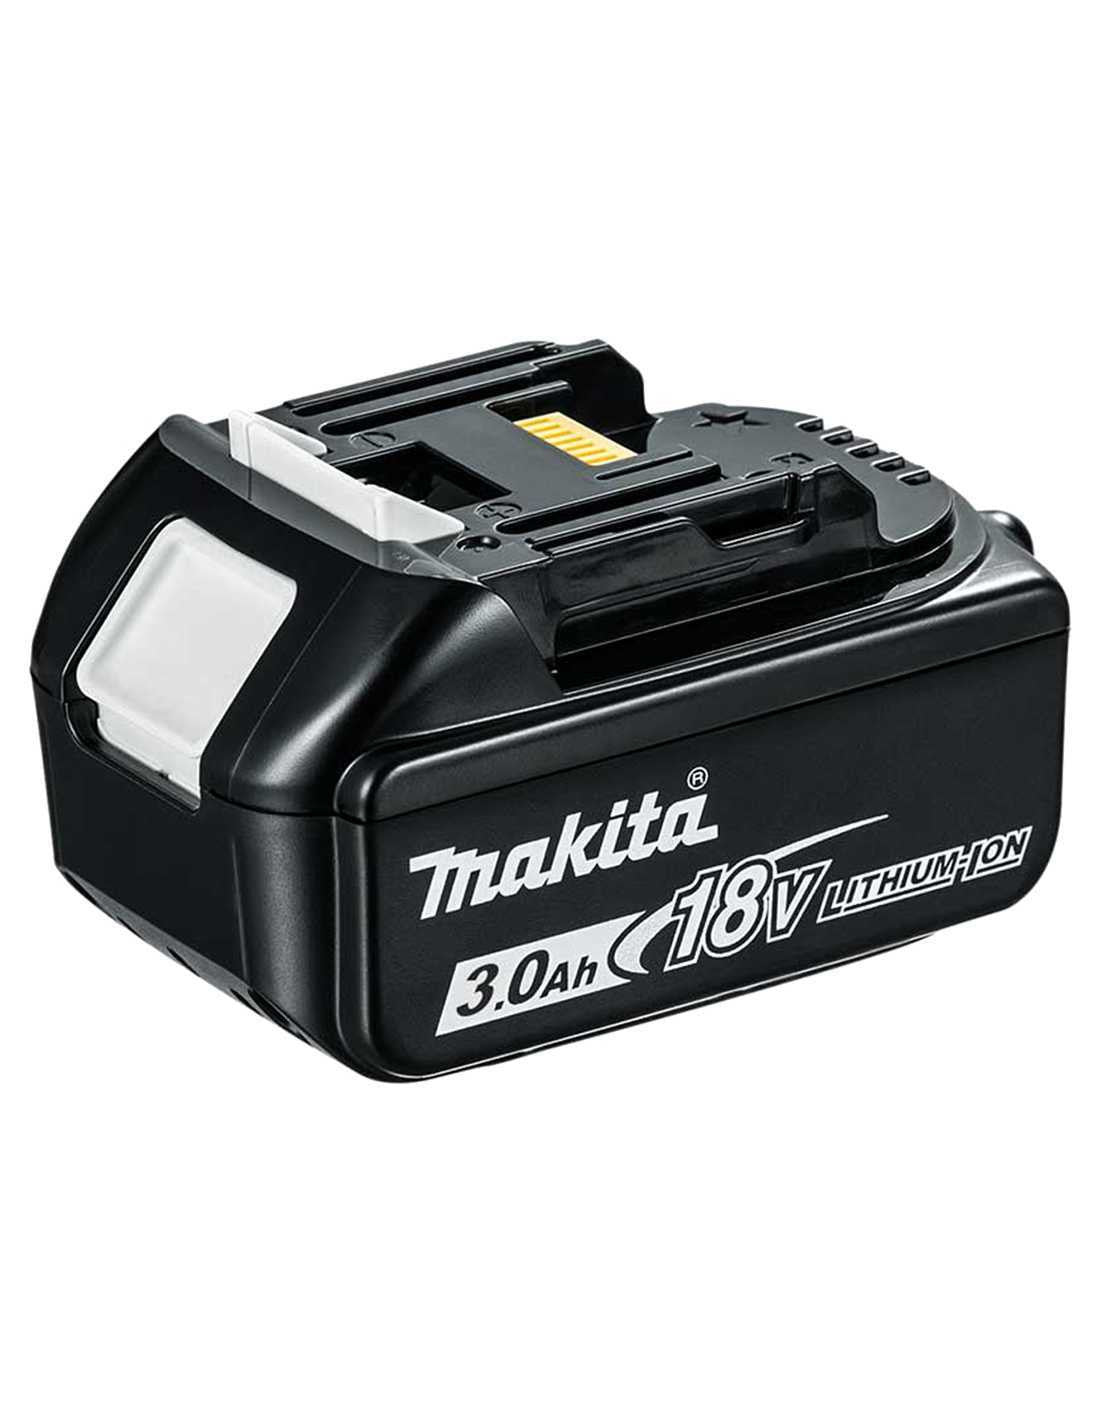 Kit Makita con 7 herramientas + 3bat 5Ah + Cargador DC18RC + 2 bolsas DLX7243BL3